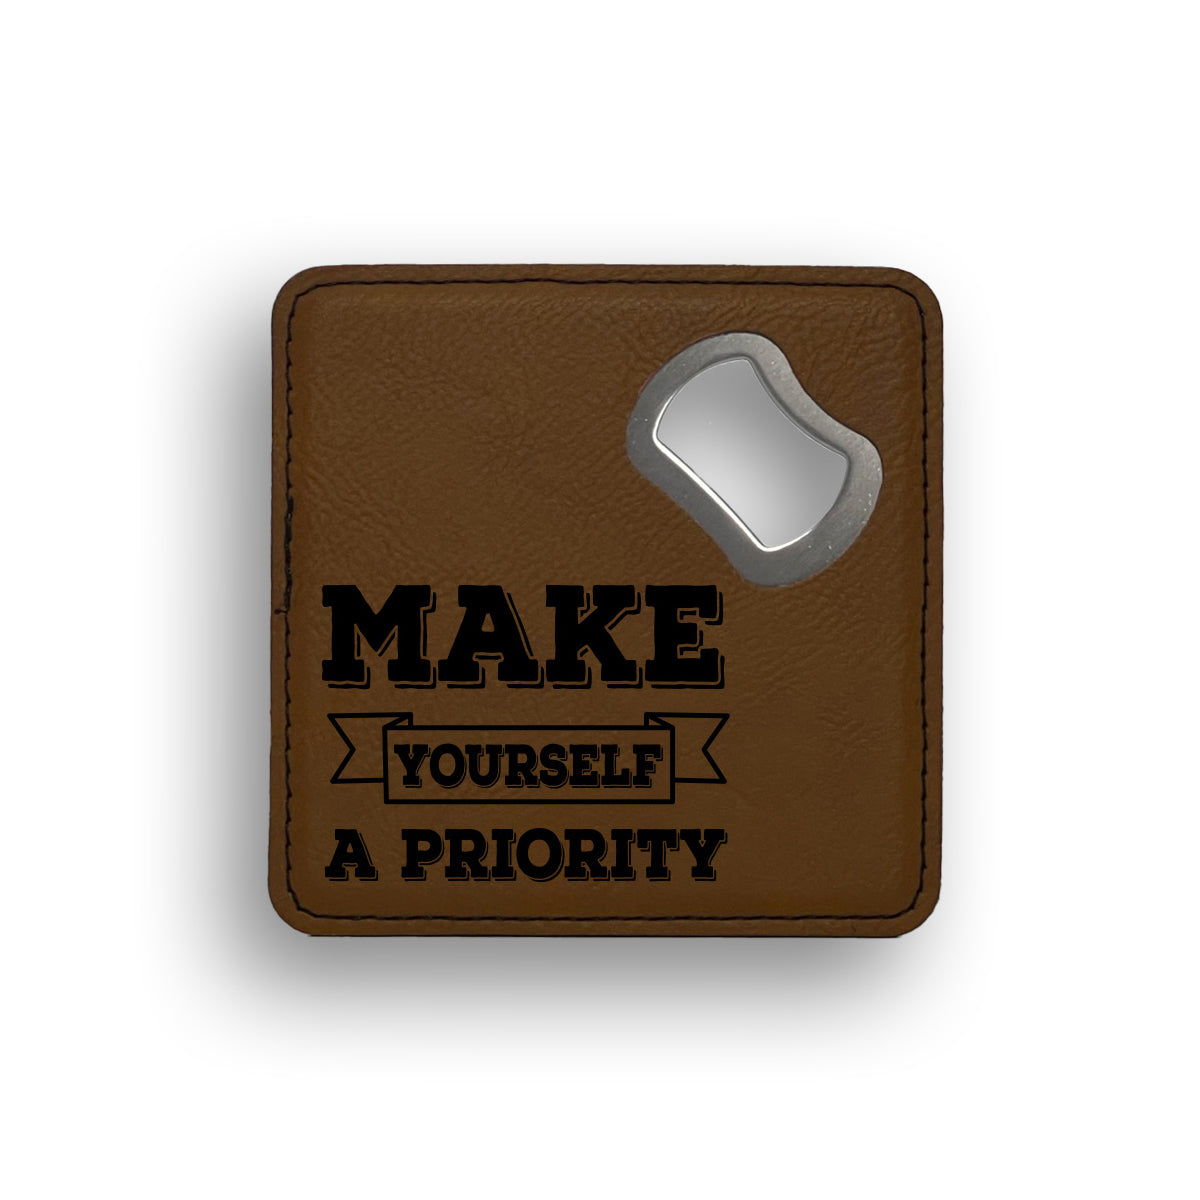 Make Yourself Priority 2 Bottle Opener Coaster